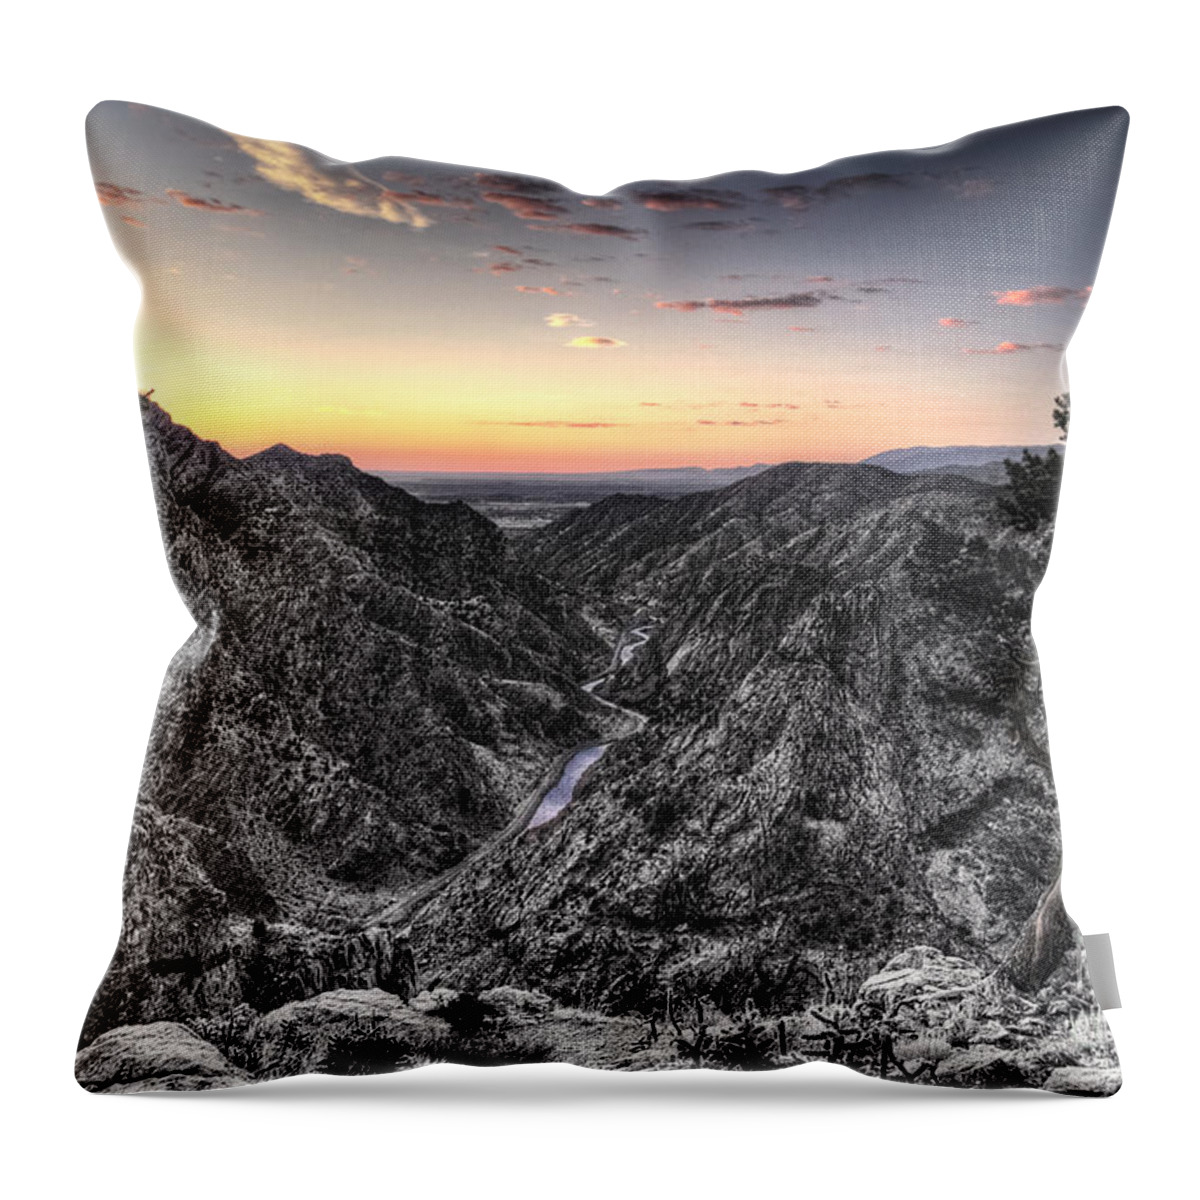 The Arkansas Through Royal Gorge Throw Pillow featuring the digital art The Arkansas Through Royal Gorge by William Fields